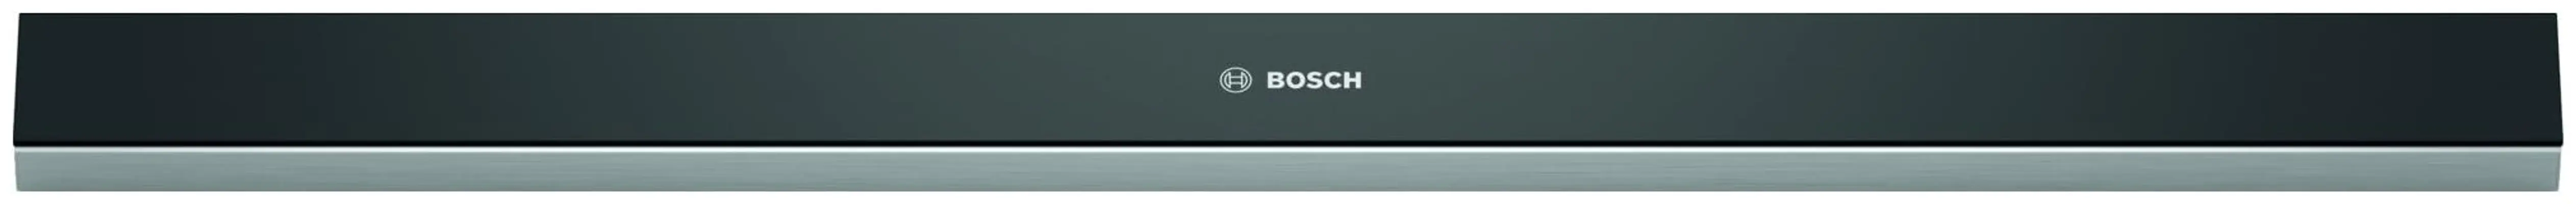 DSZ4686-Bosch-Afzuigkap-accessoires